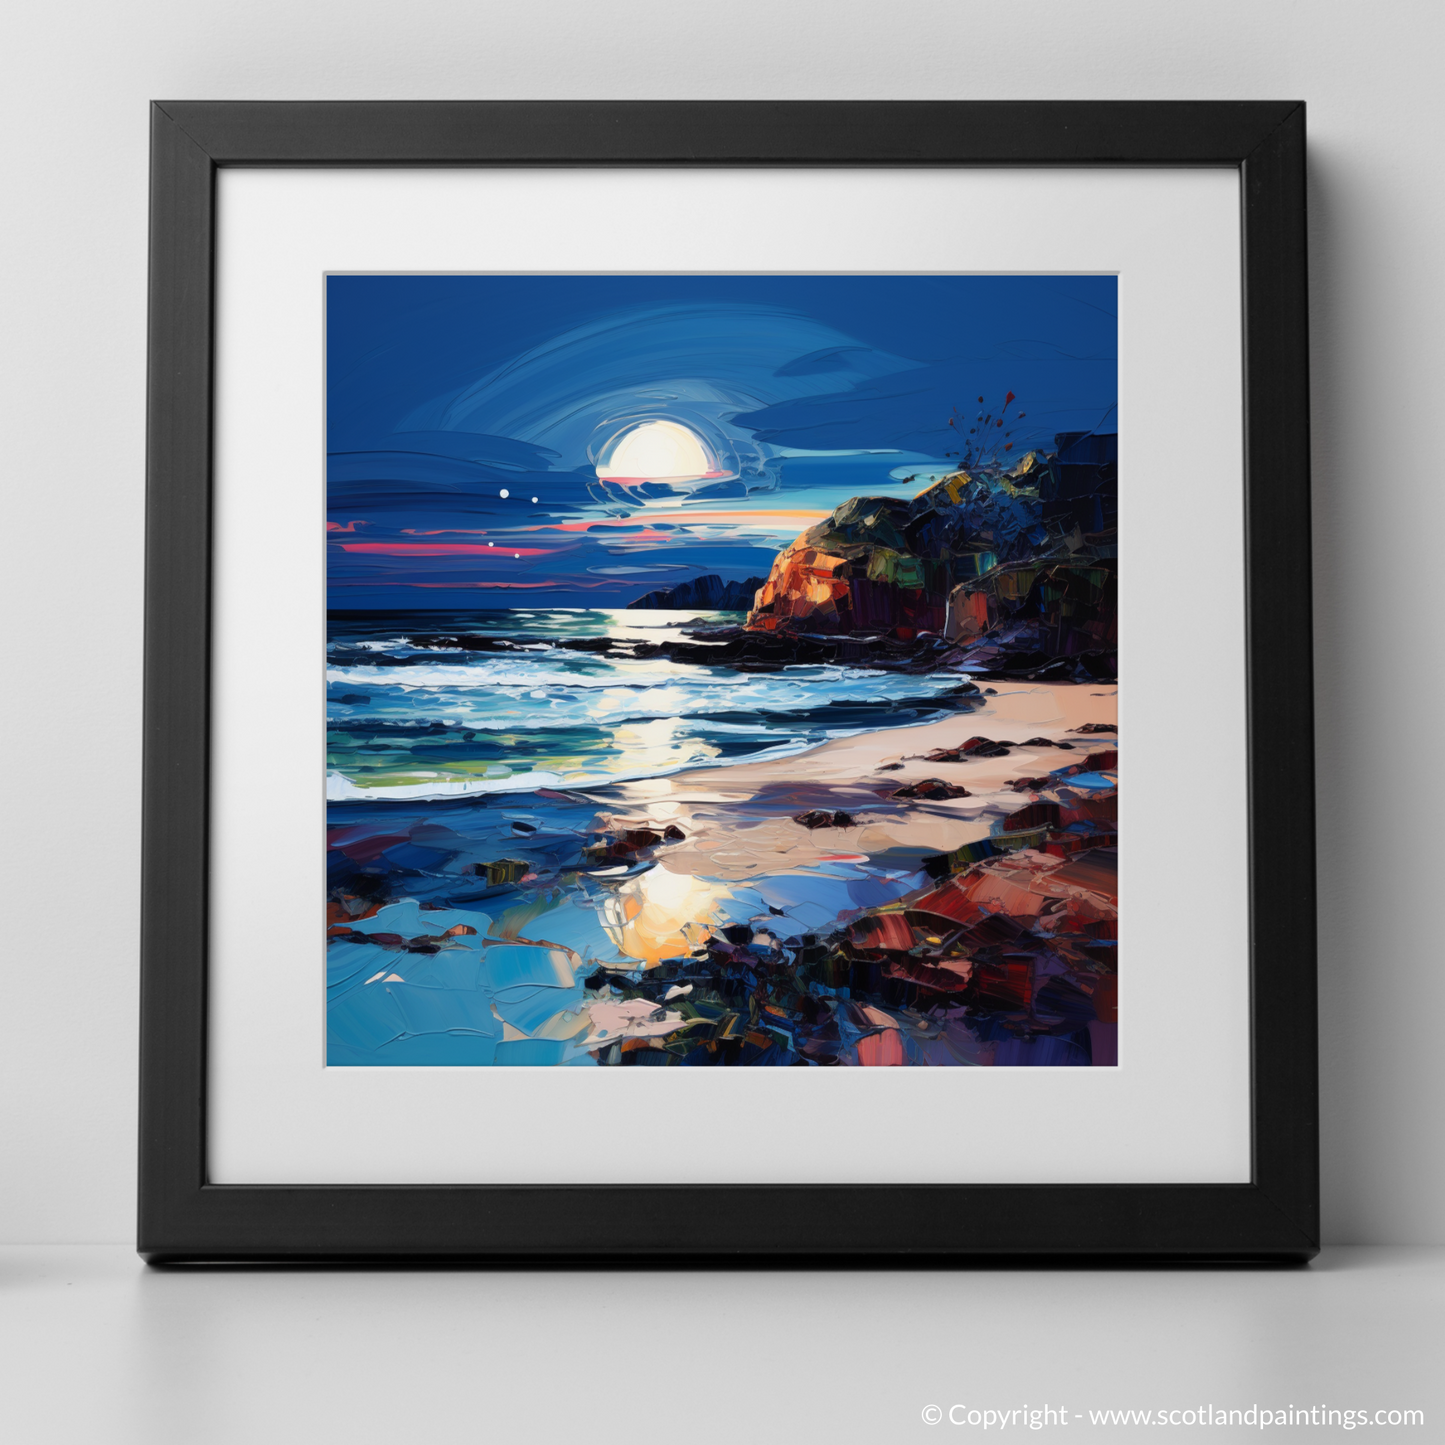 Art Print of Seilebost Beach at dusk with a black frame